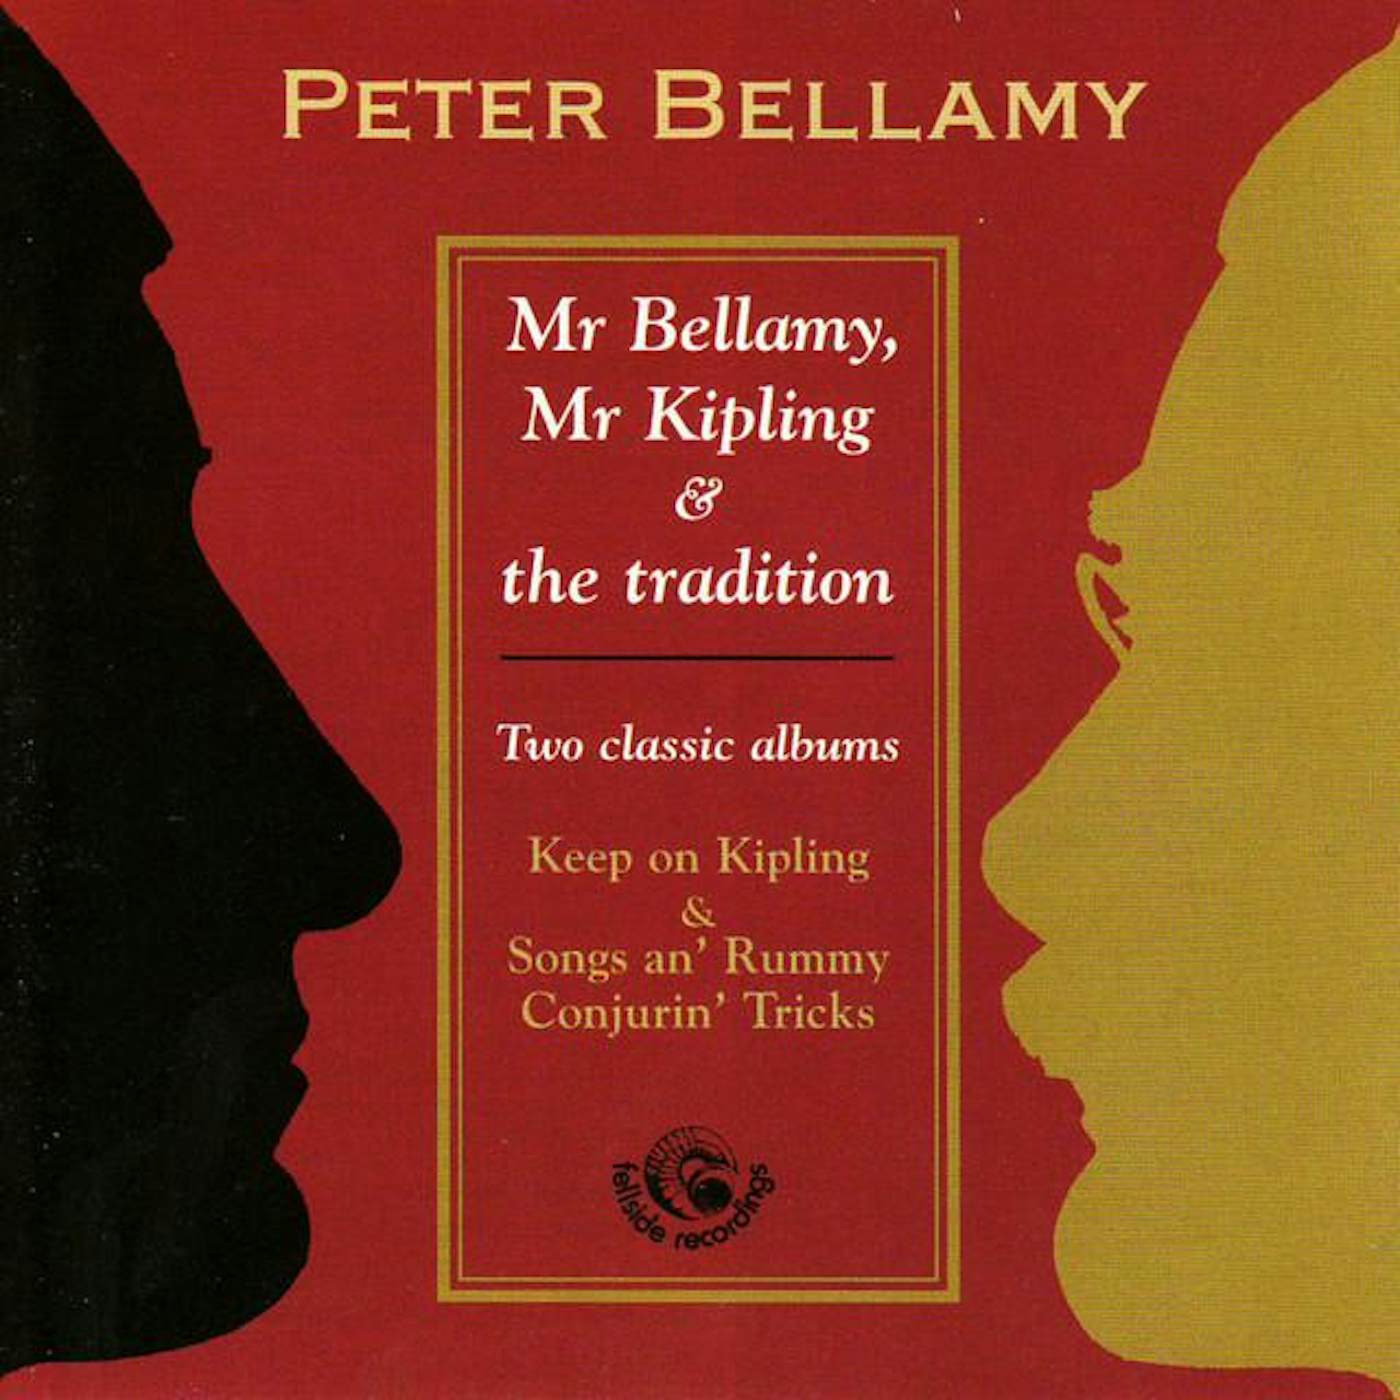 Peter Bellamy